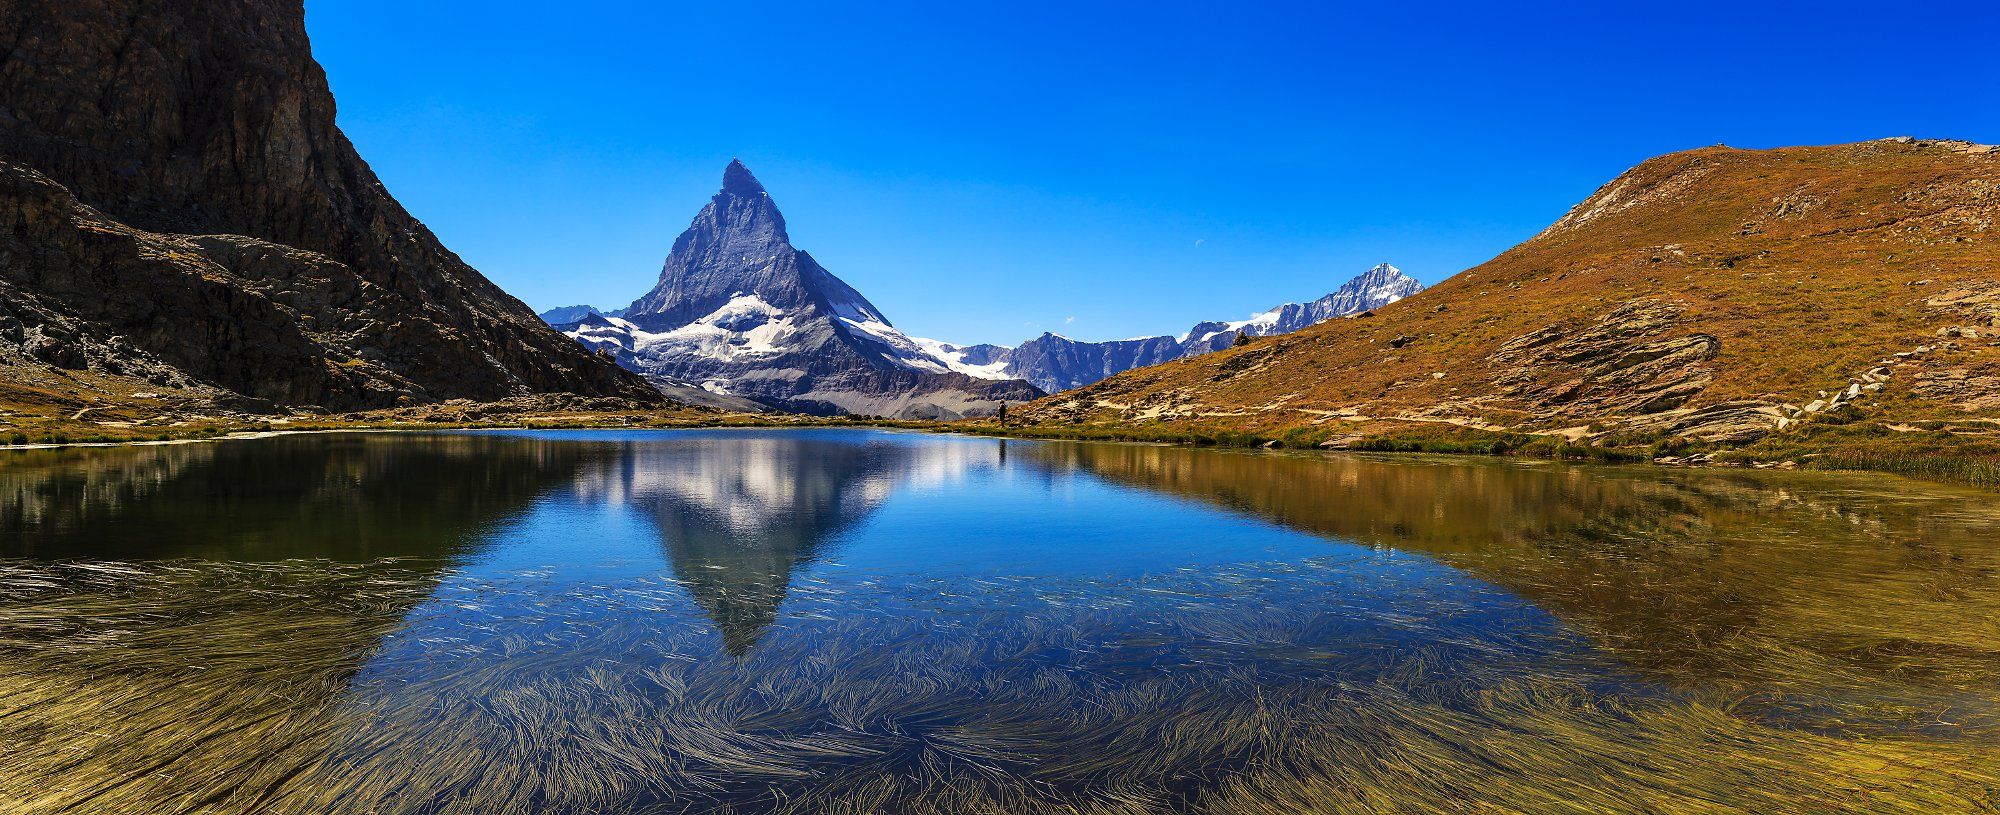 mountain lake, water reflection, switzerland, Vitalis Vasylius